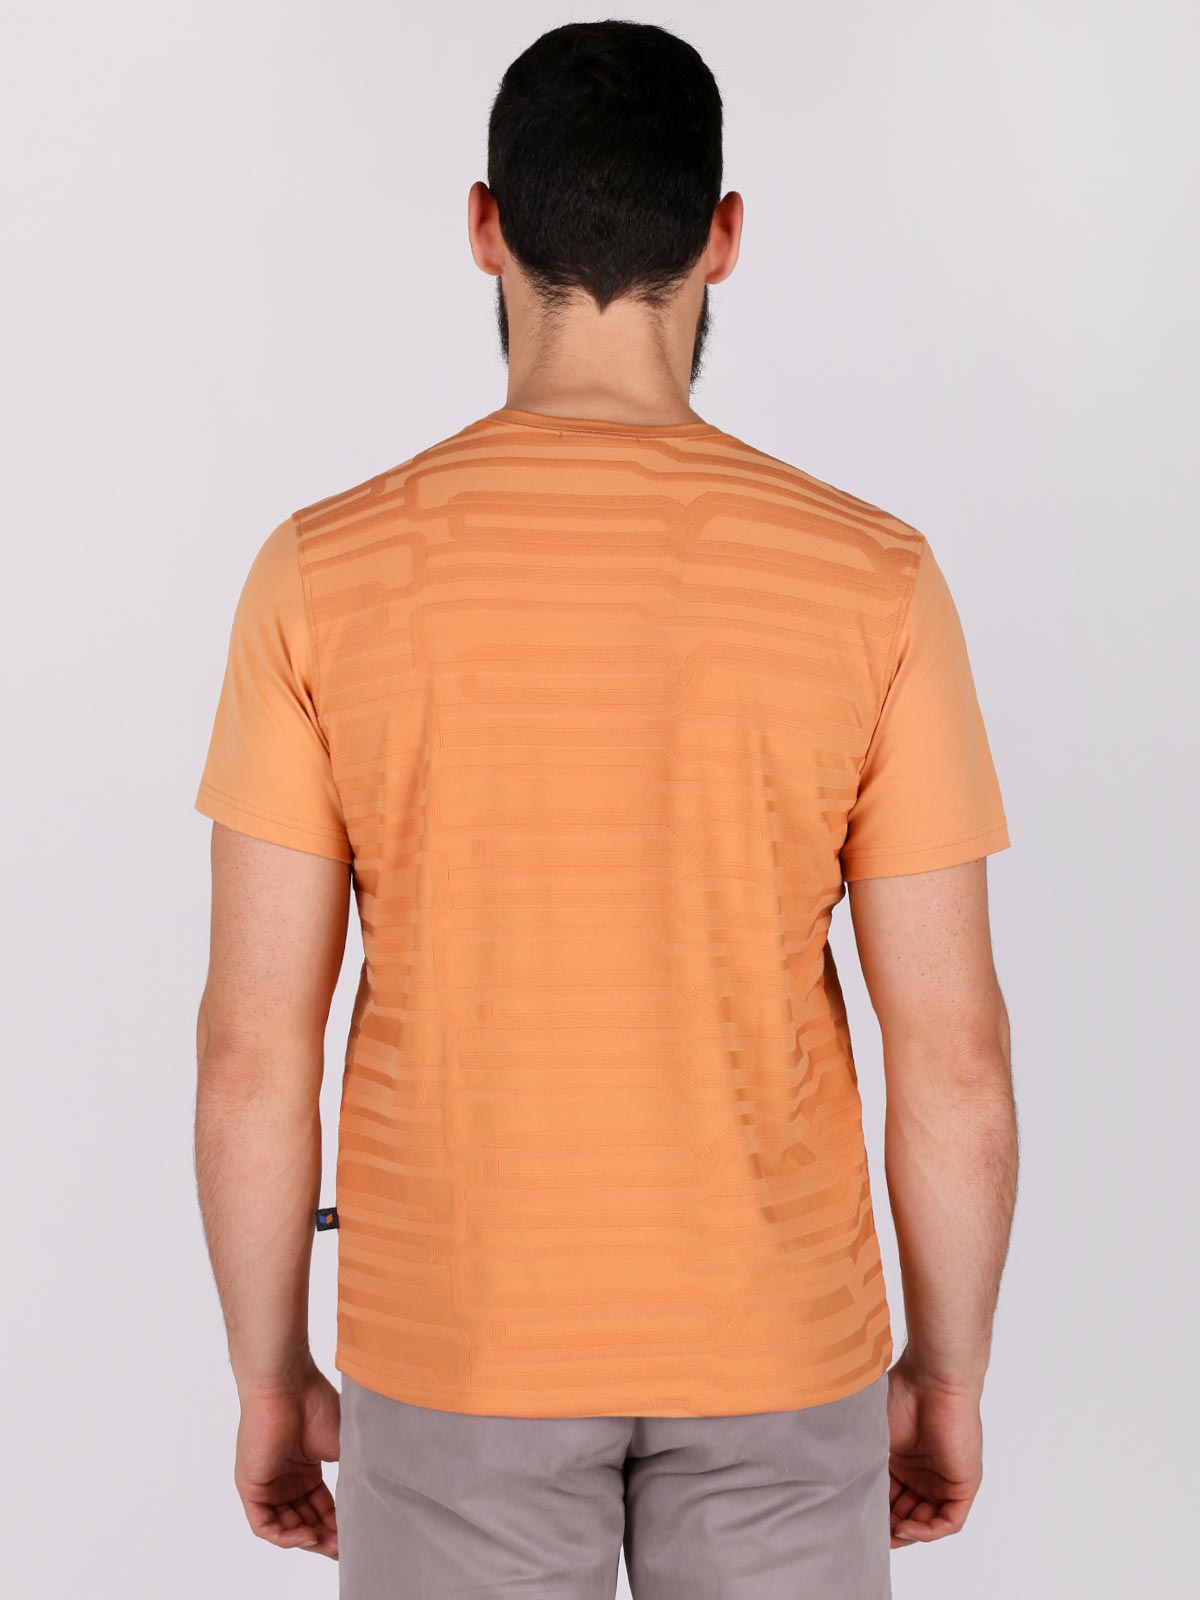  tshirt σε πορτοκαλί χρώμα με ανάγλυφο  - 88011 € 6.75 img2